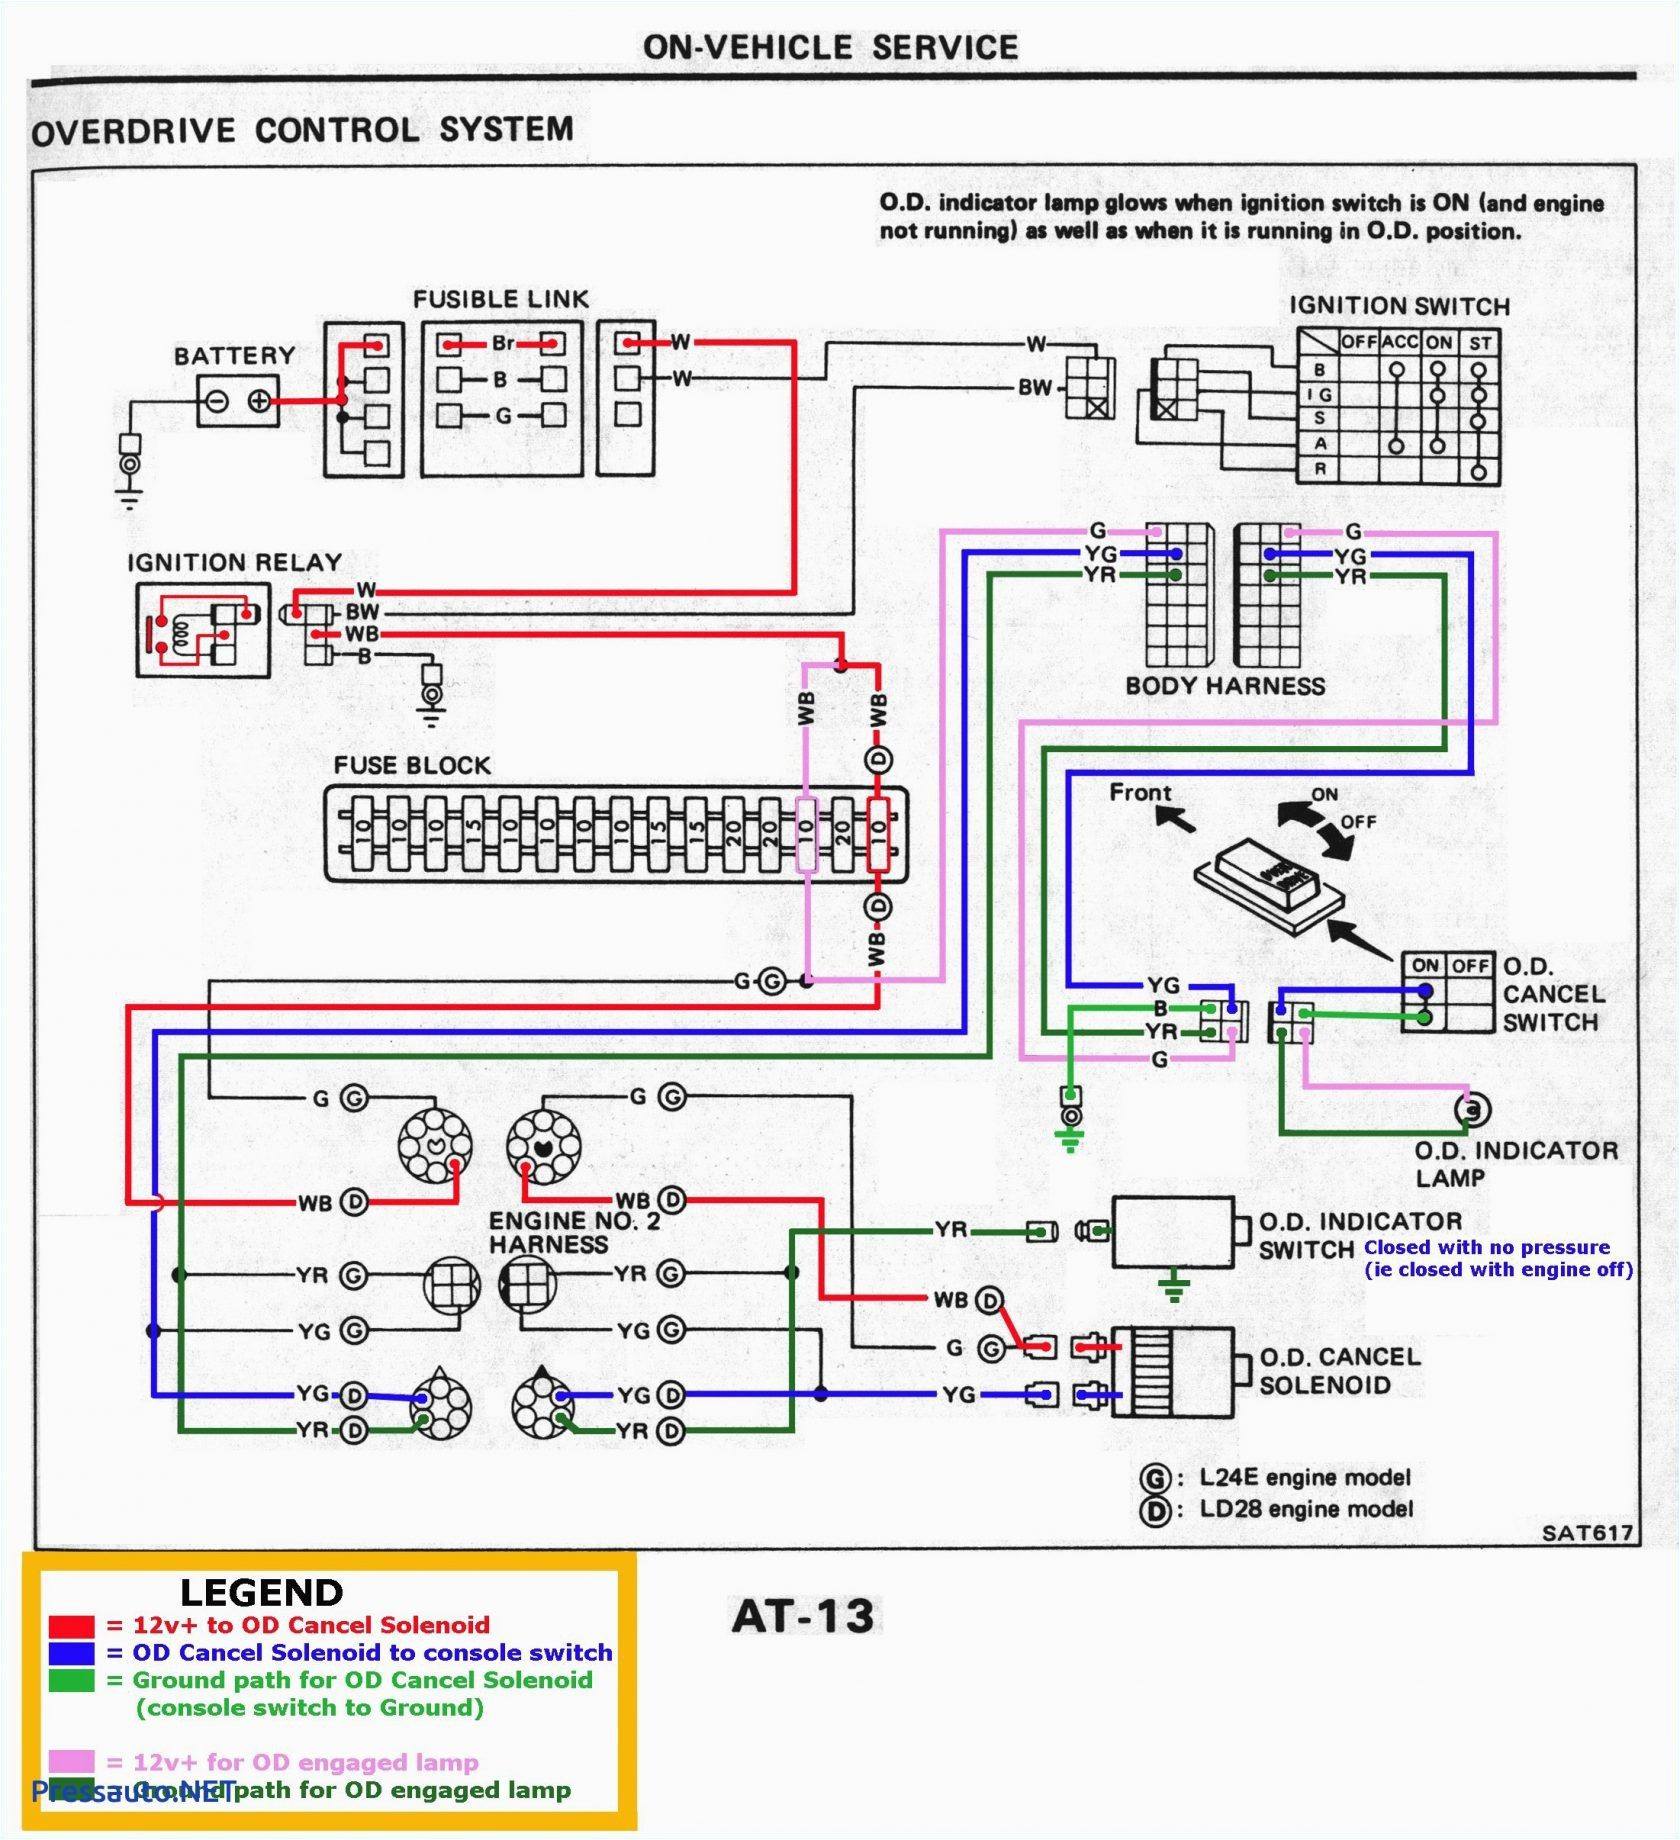 summerland wiring diagram wiring diagram compilation summerland wiring diagram